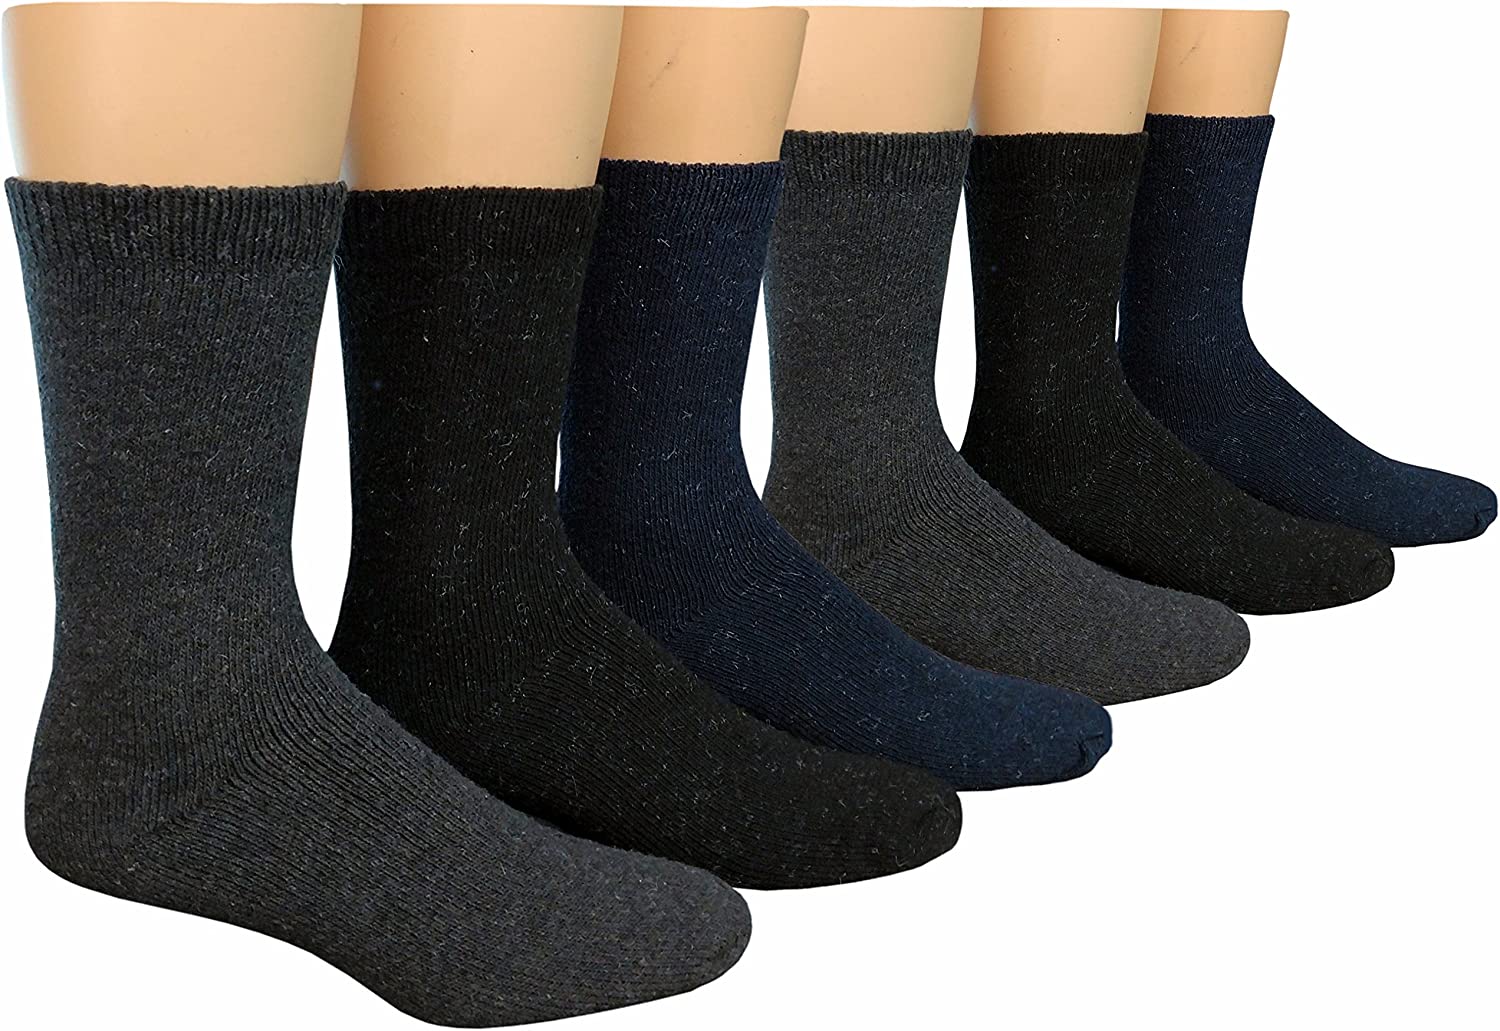 SOCKS'NBULK 12 Pairs of Mens Heavy Duty Wool Blend Winter Warm Work Socks - image 2 of 4